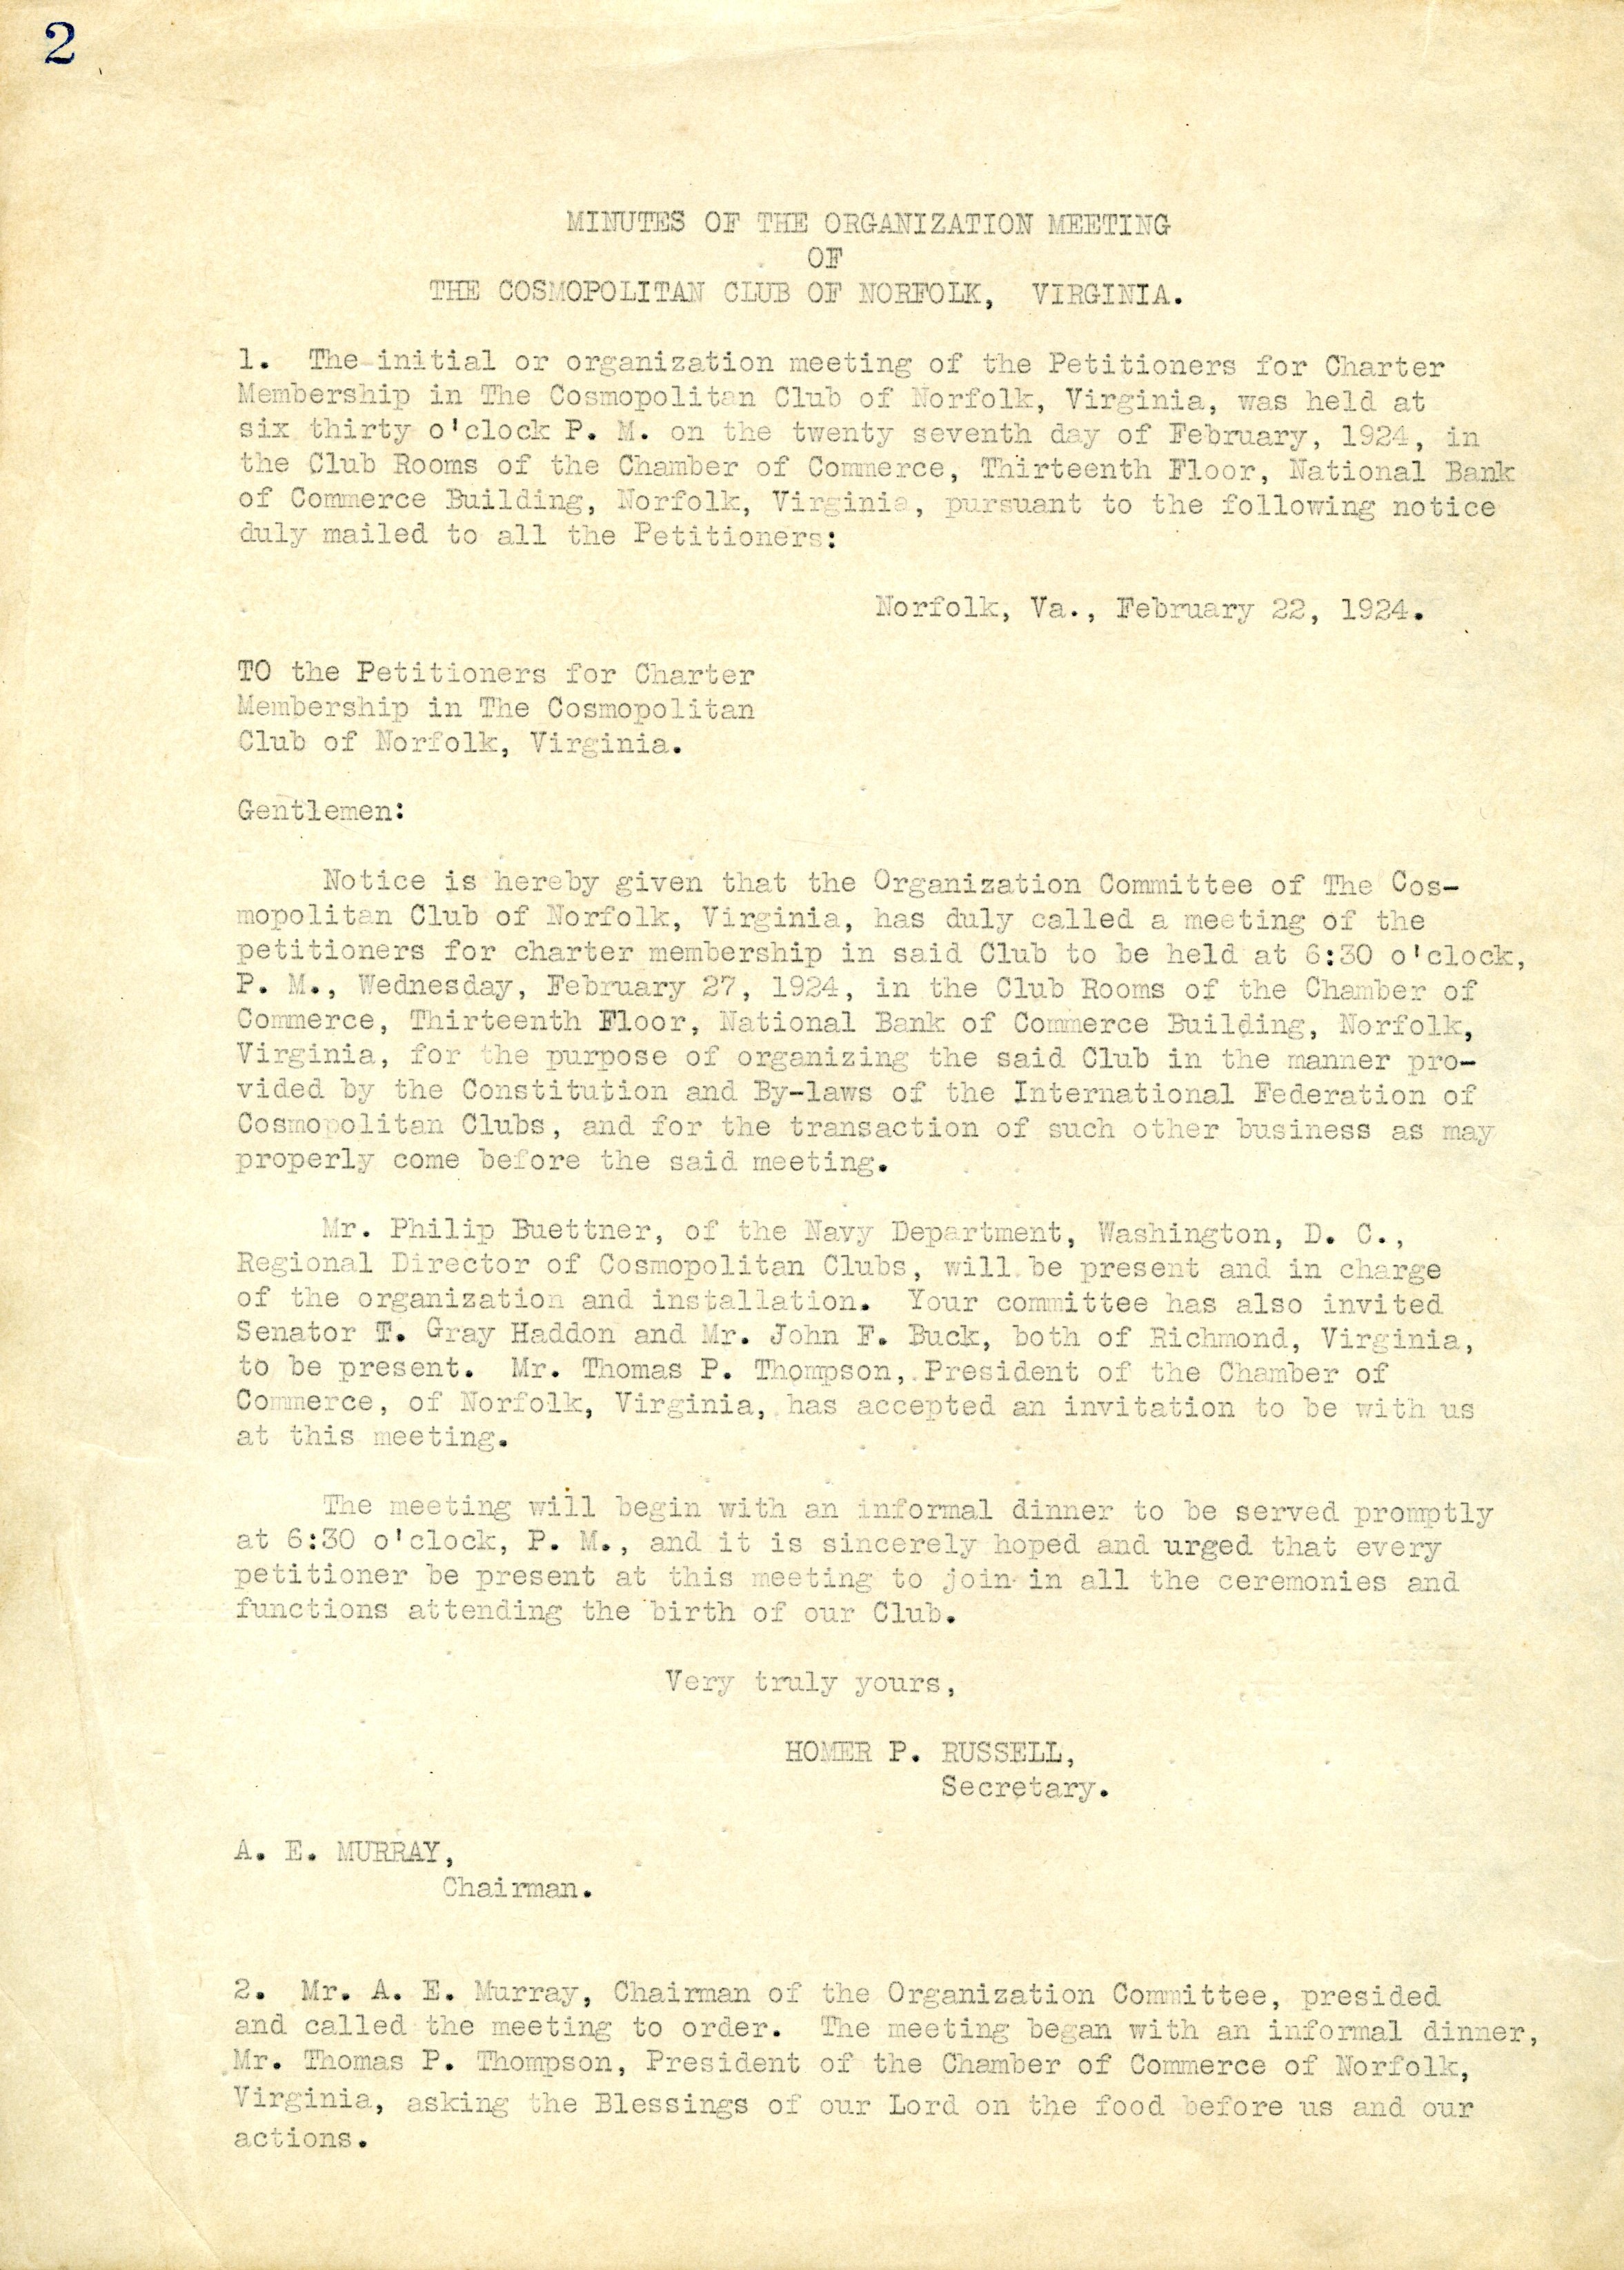 Meeting Minutes, 1924 February 22